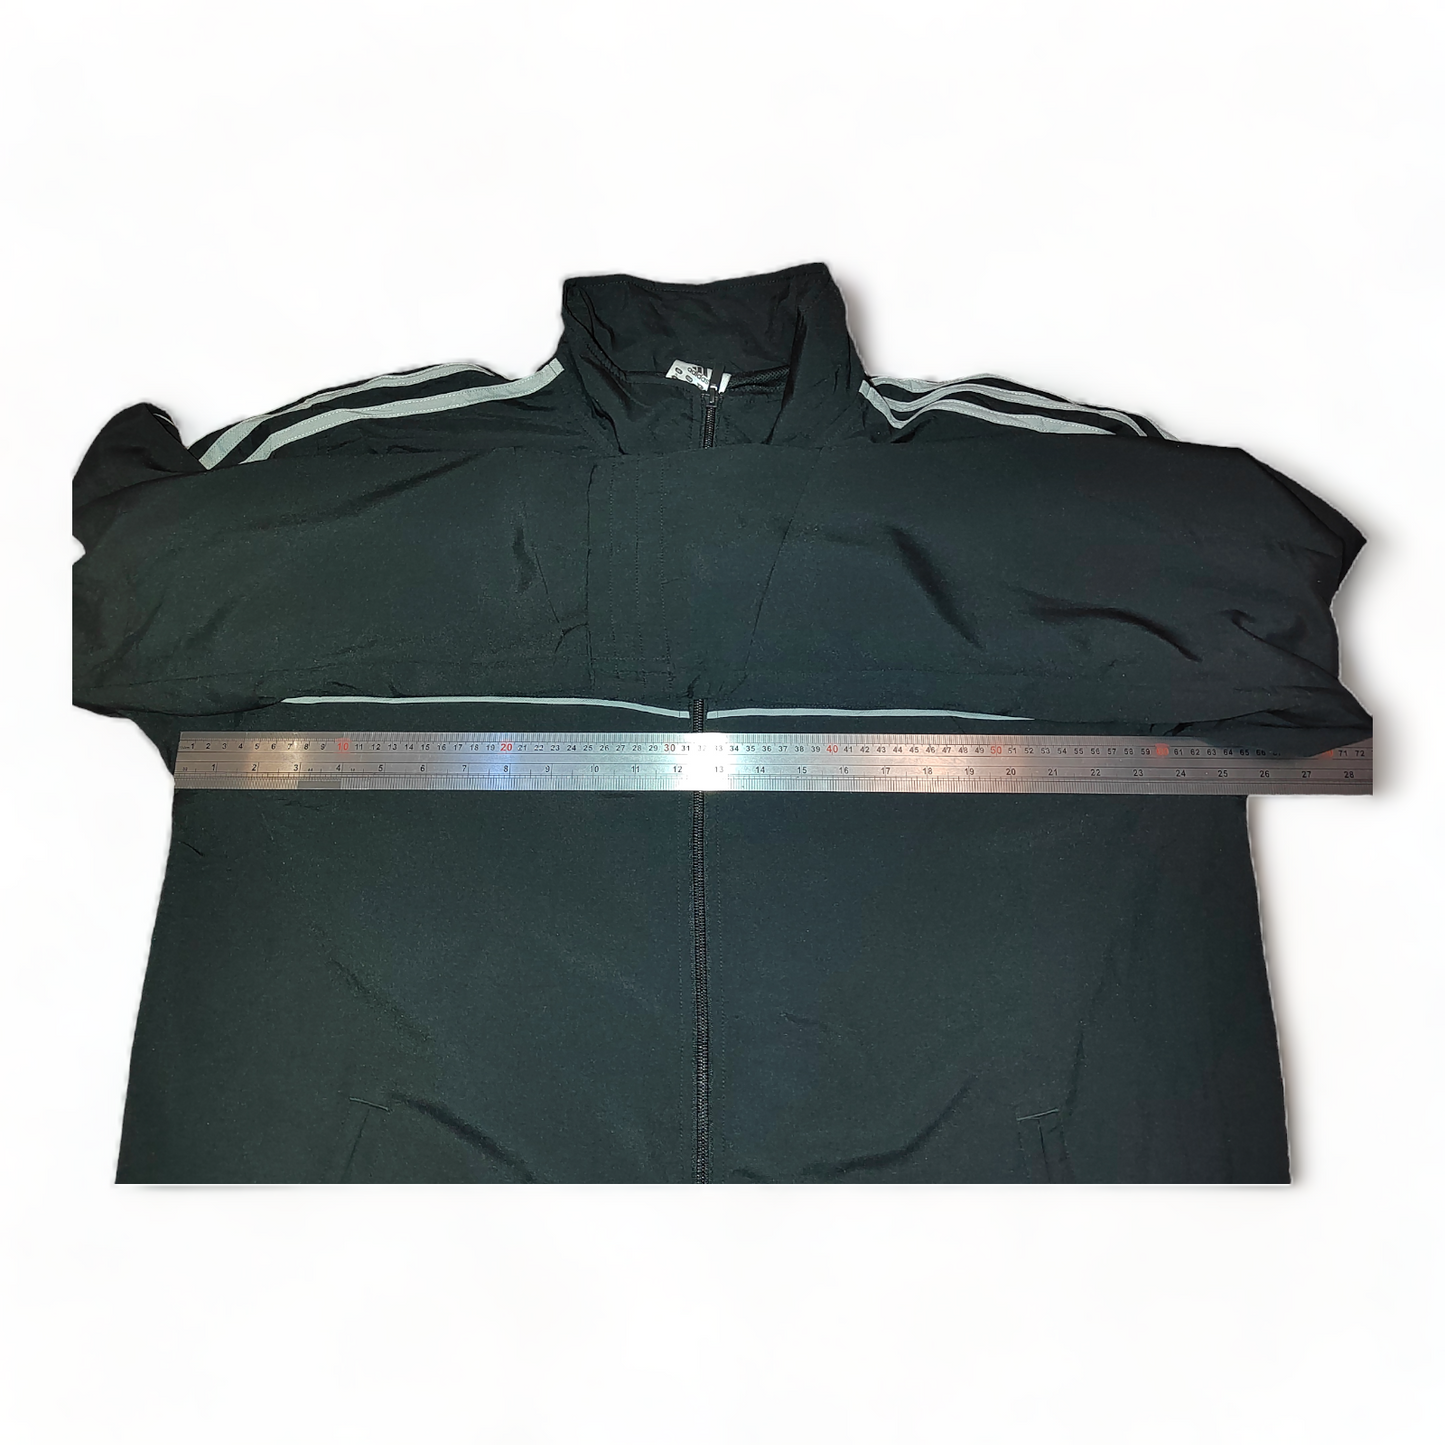 Adidas Jacket Mens XL Black Zip Up